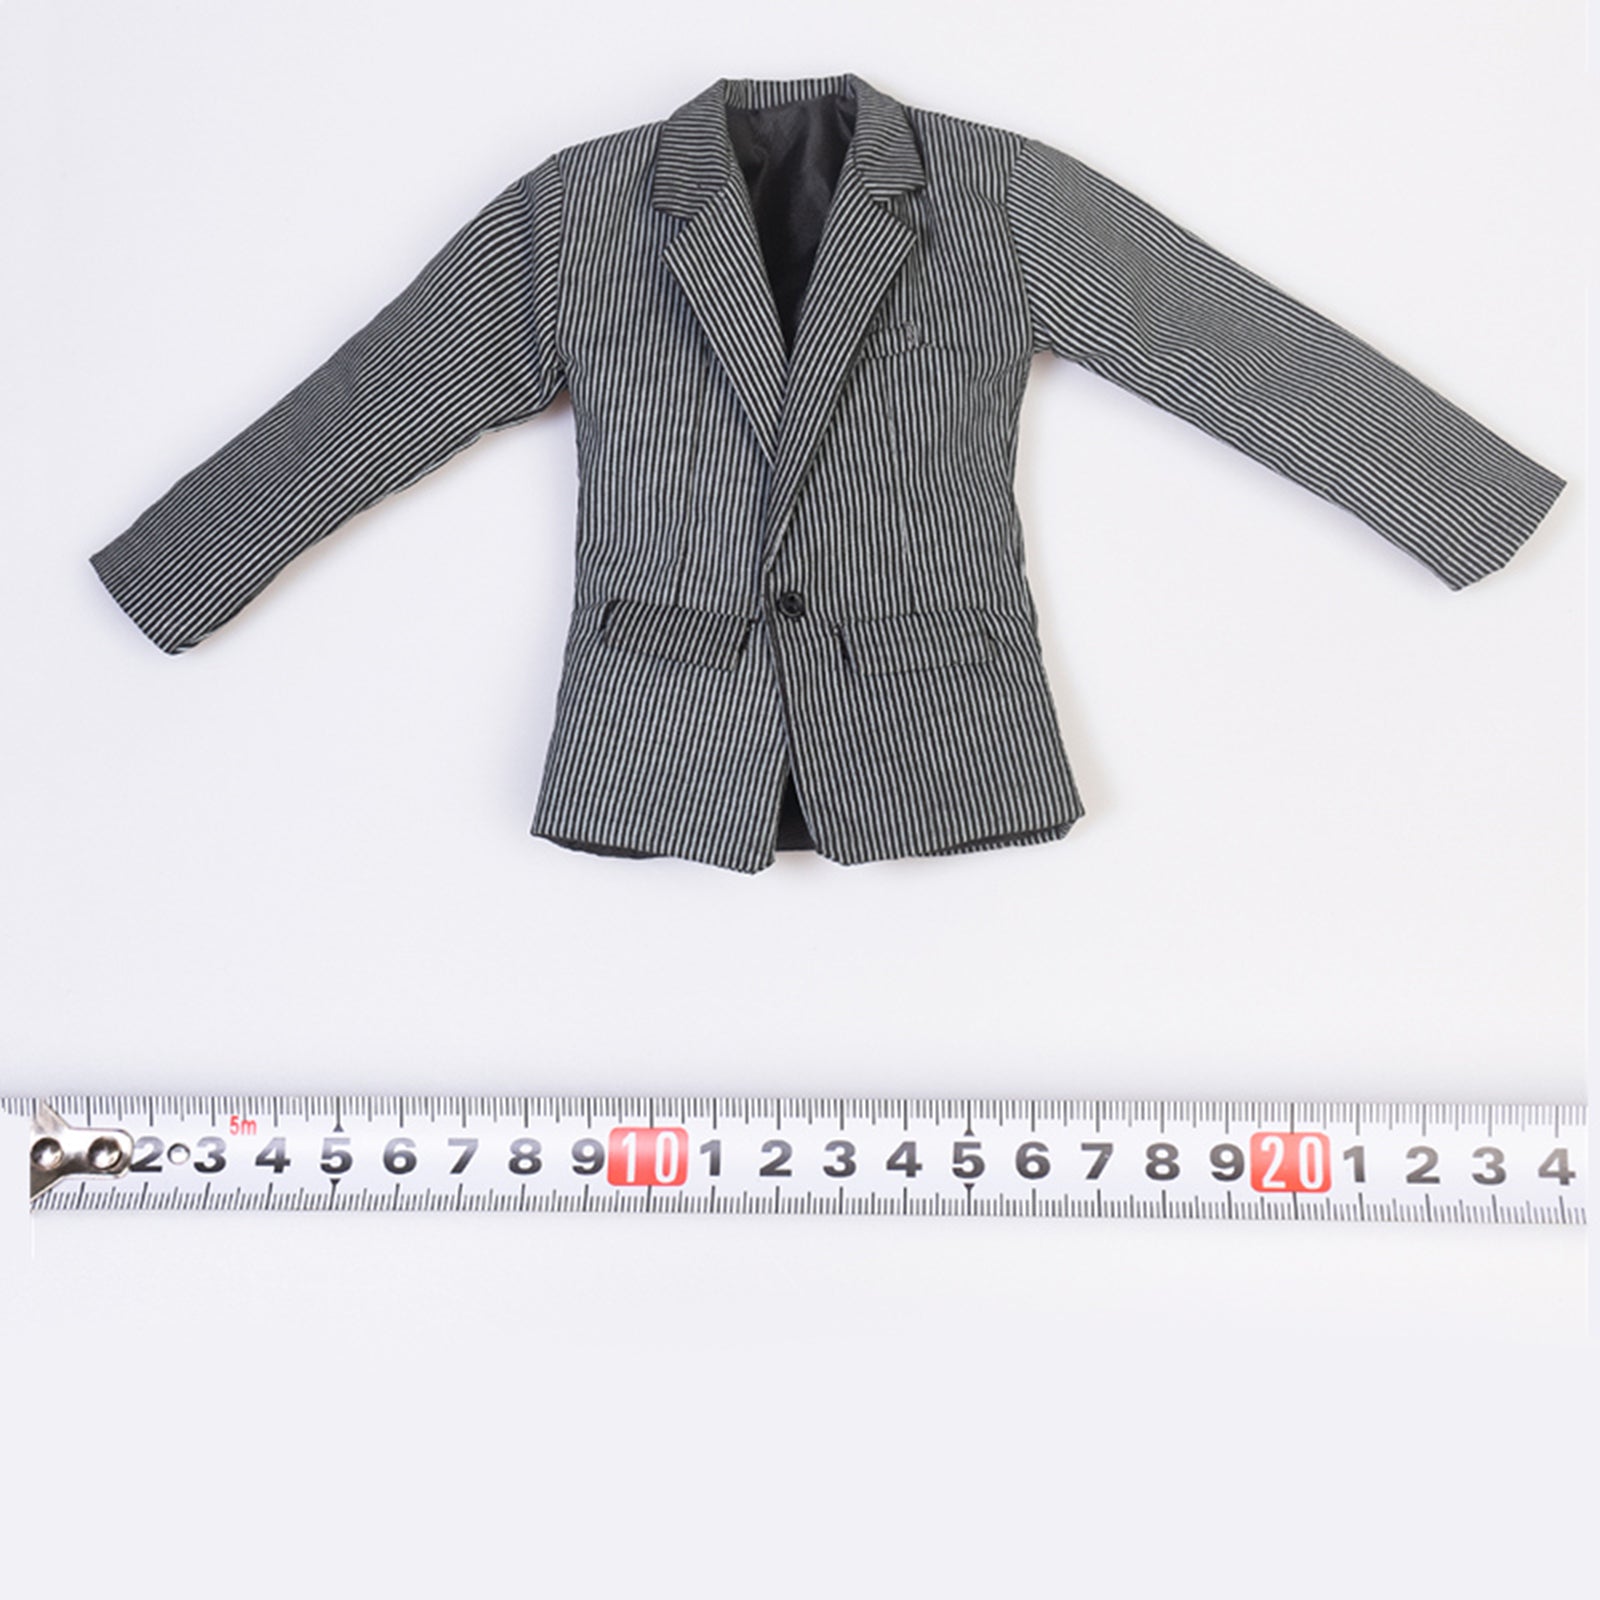 1/6 Scale Male Figure Suit Model Clothes Coat Handmade For 12" Action Figure